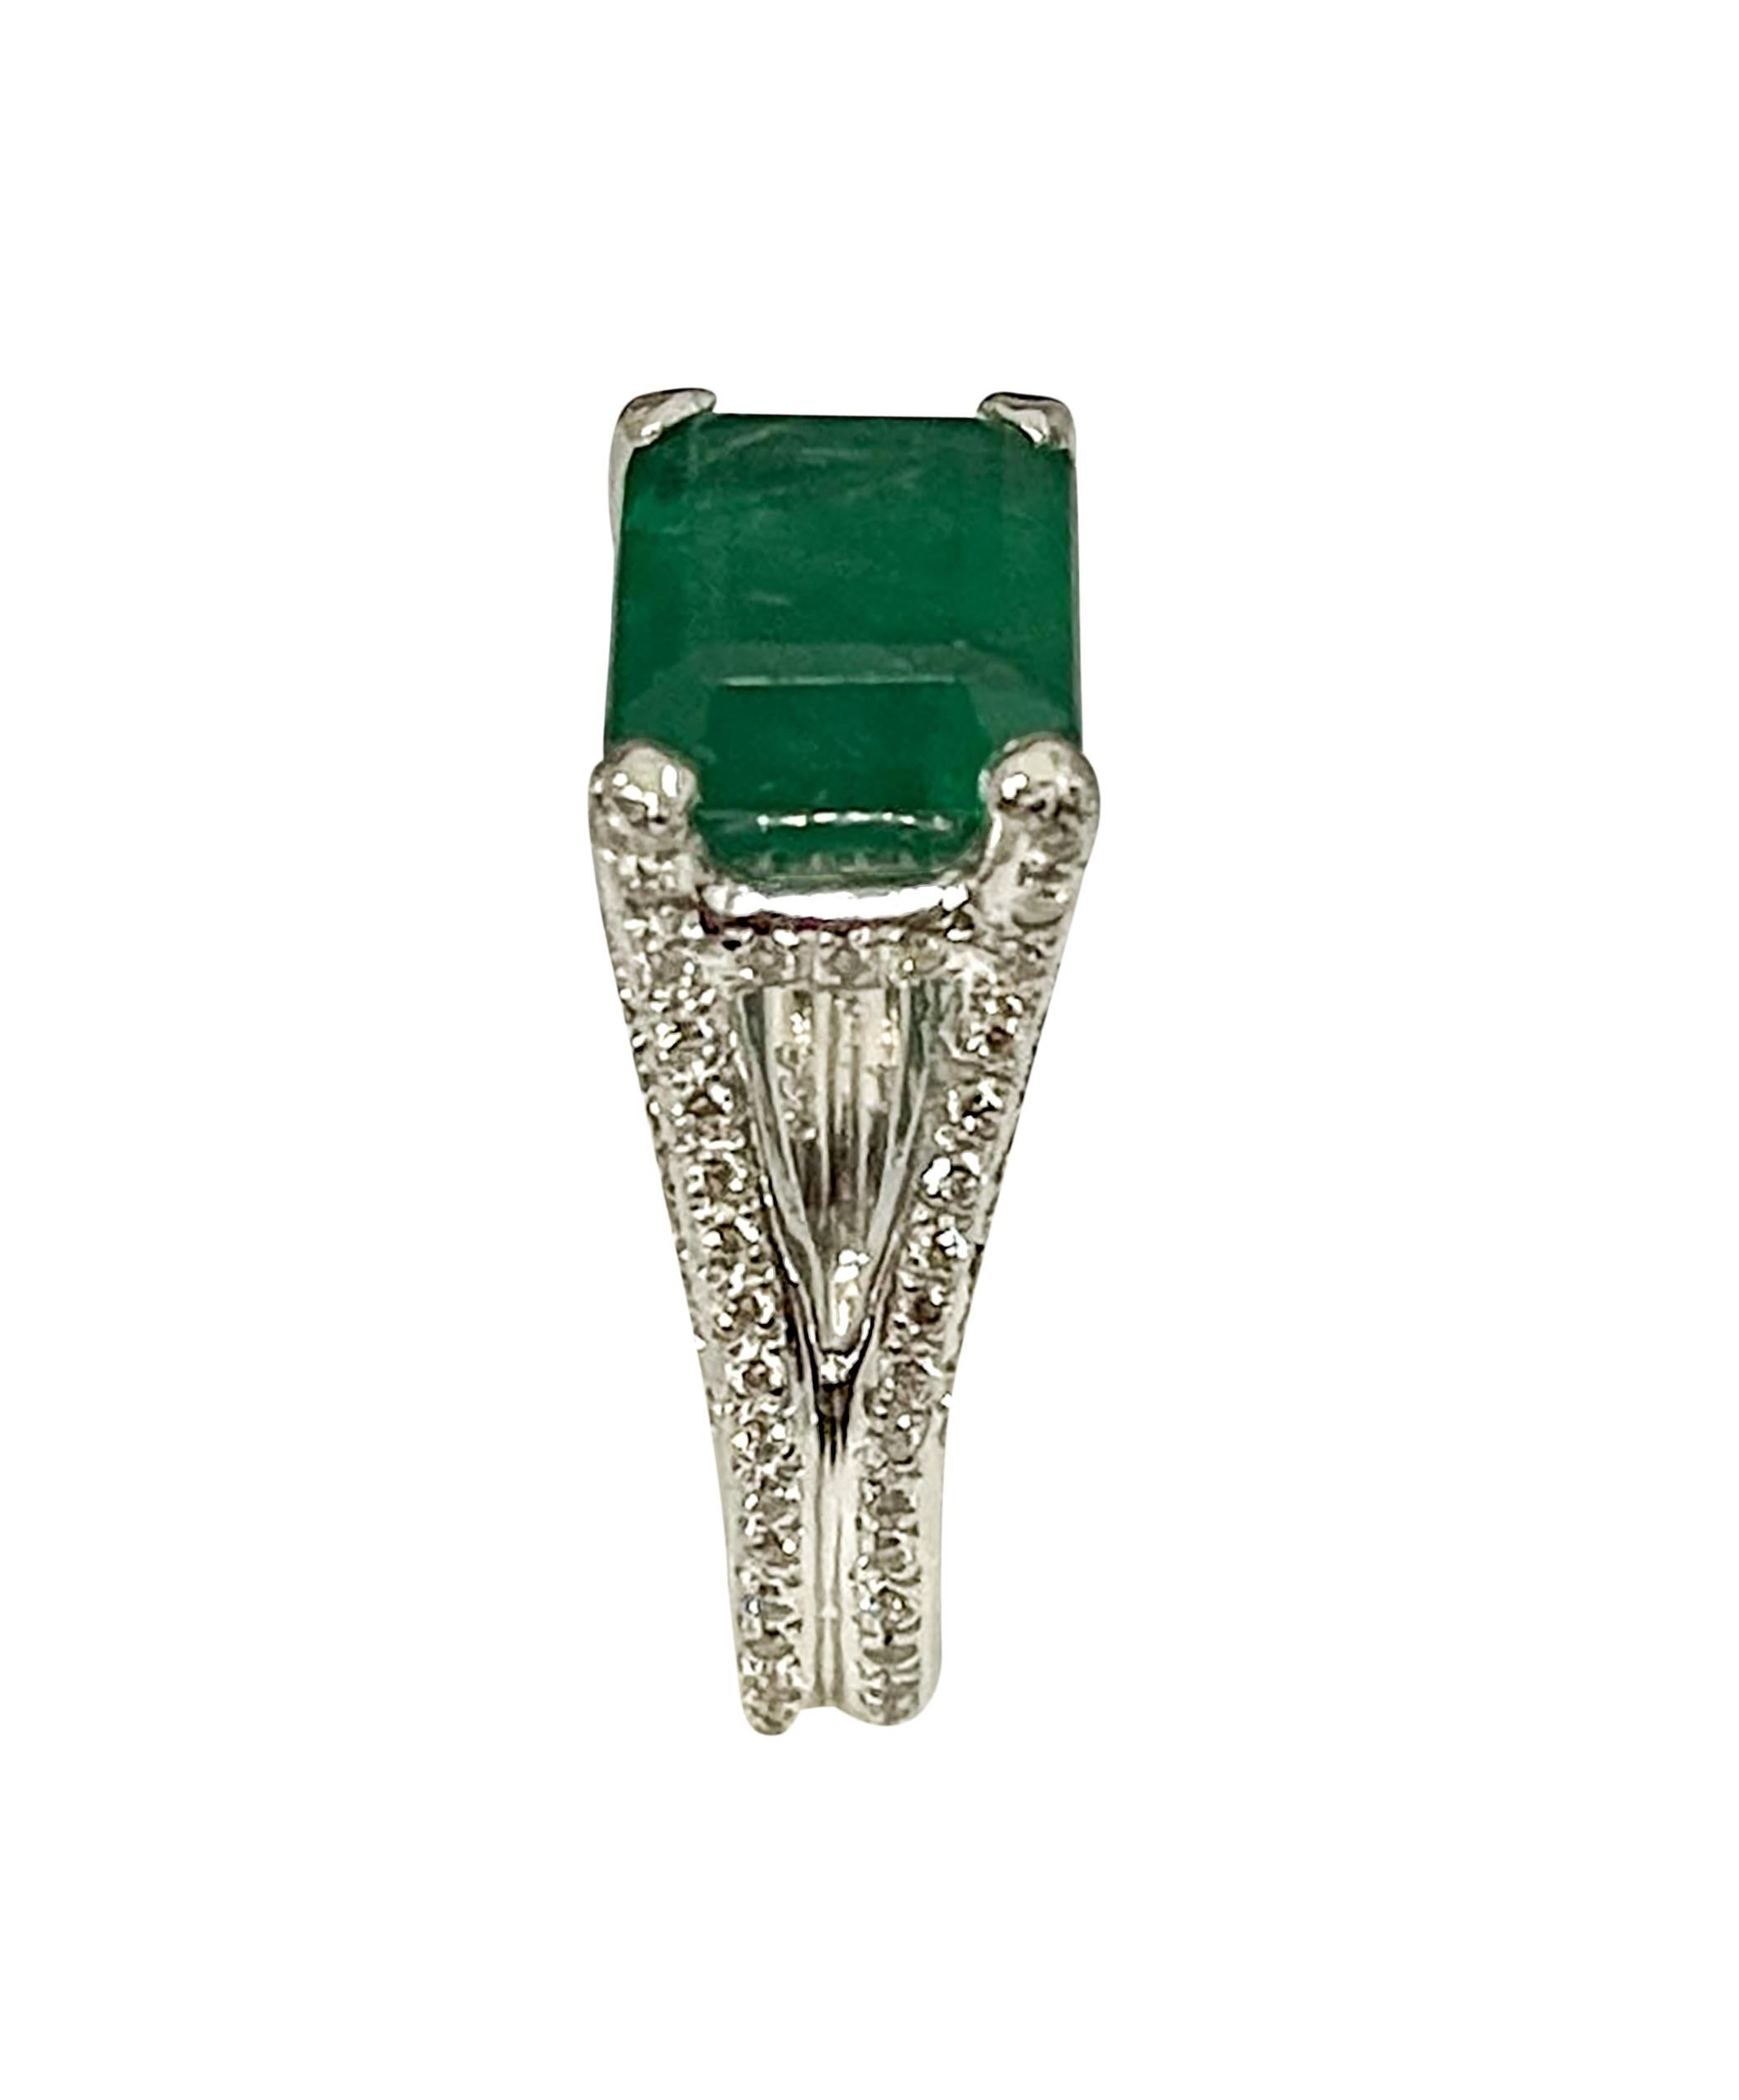 8.5 carat emerald cut diamond ring